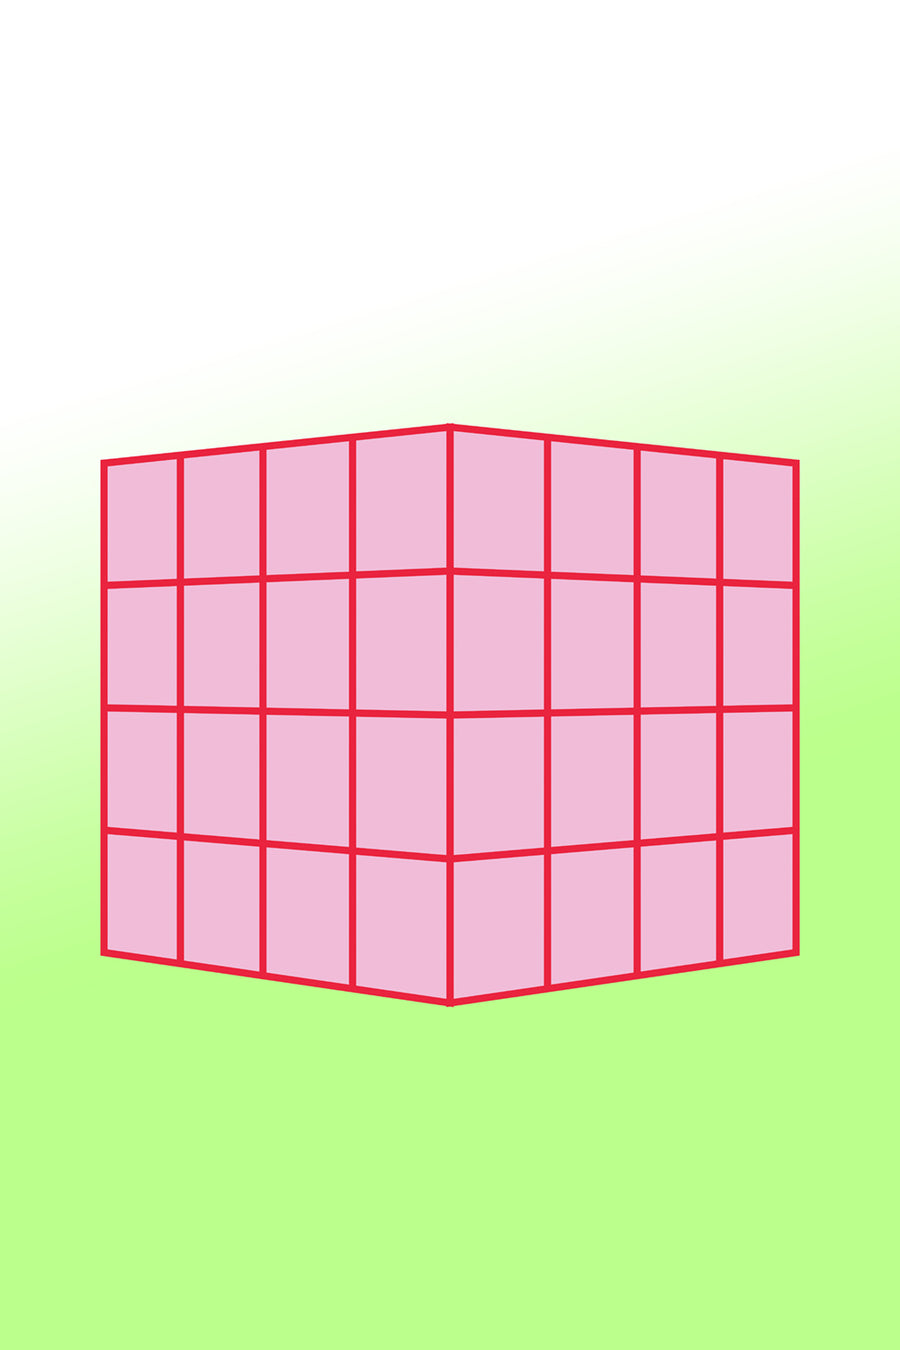 Tiled Cube 3